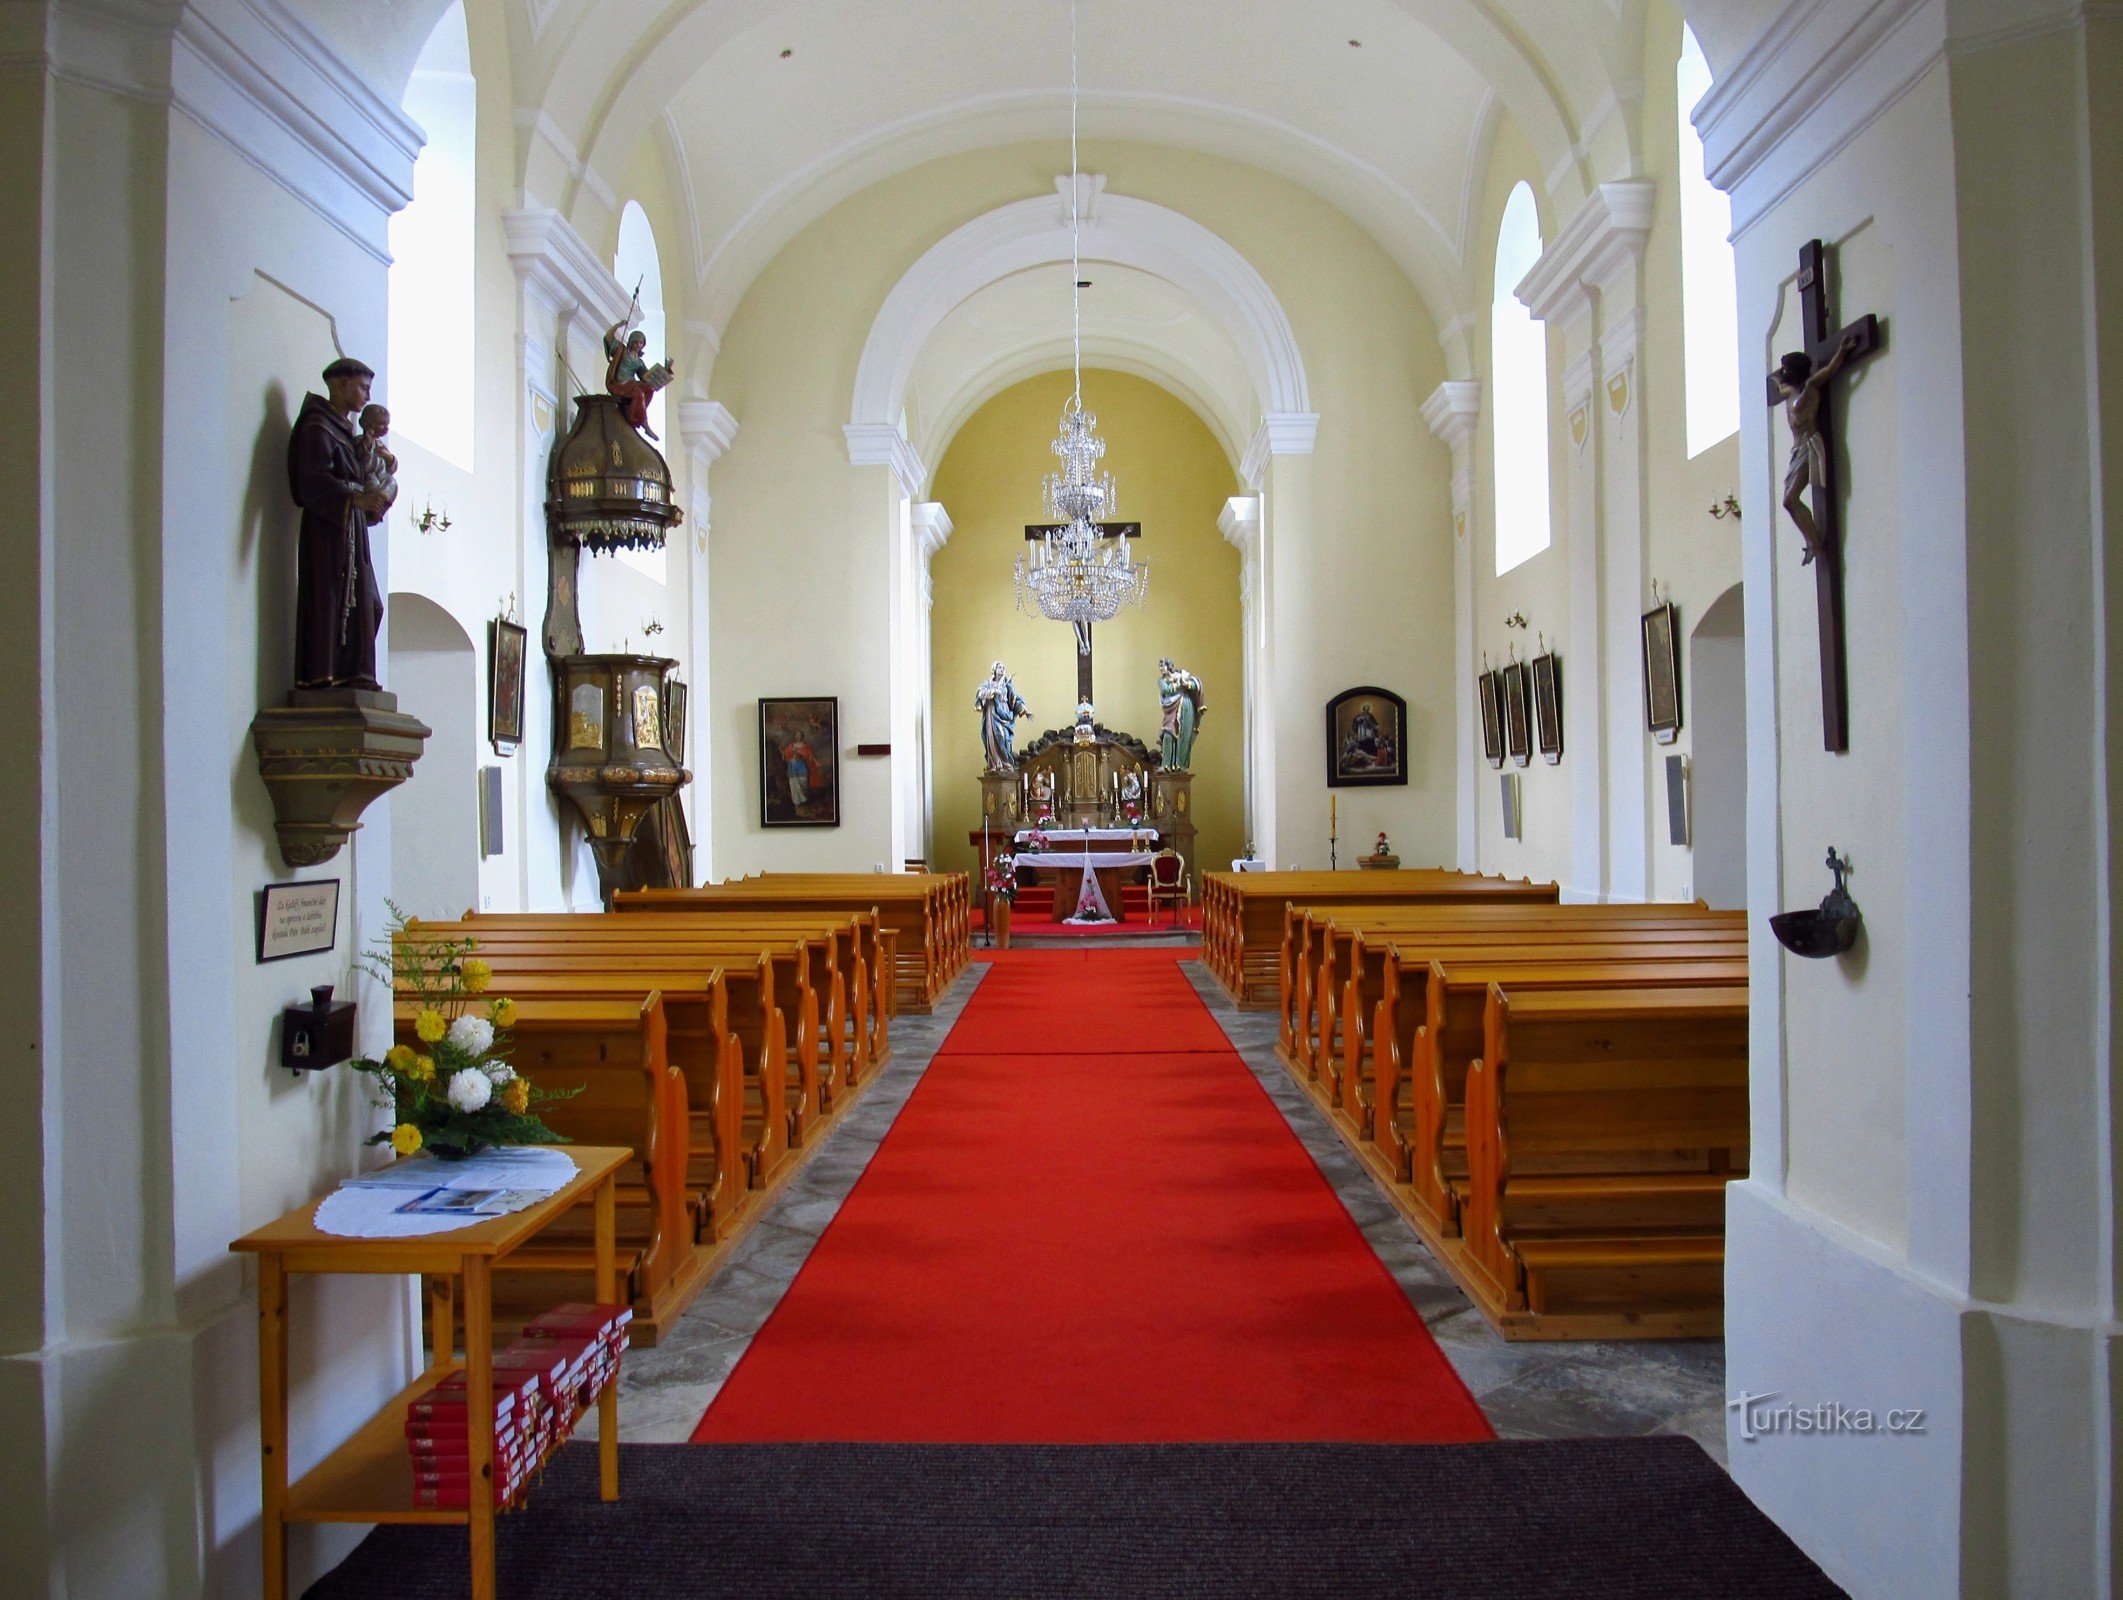 02 Snow church, interior